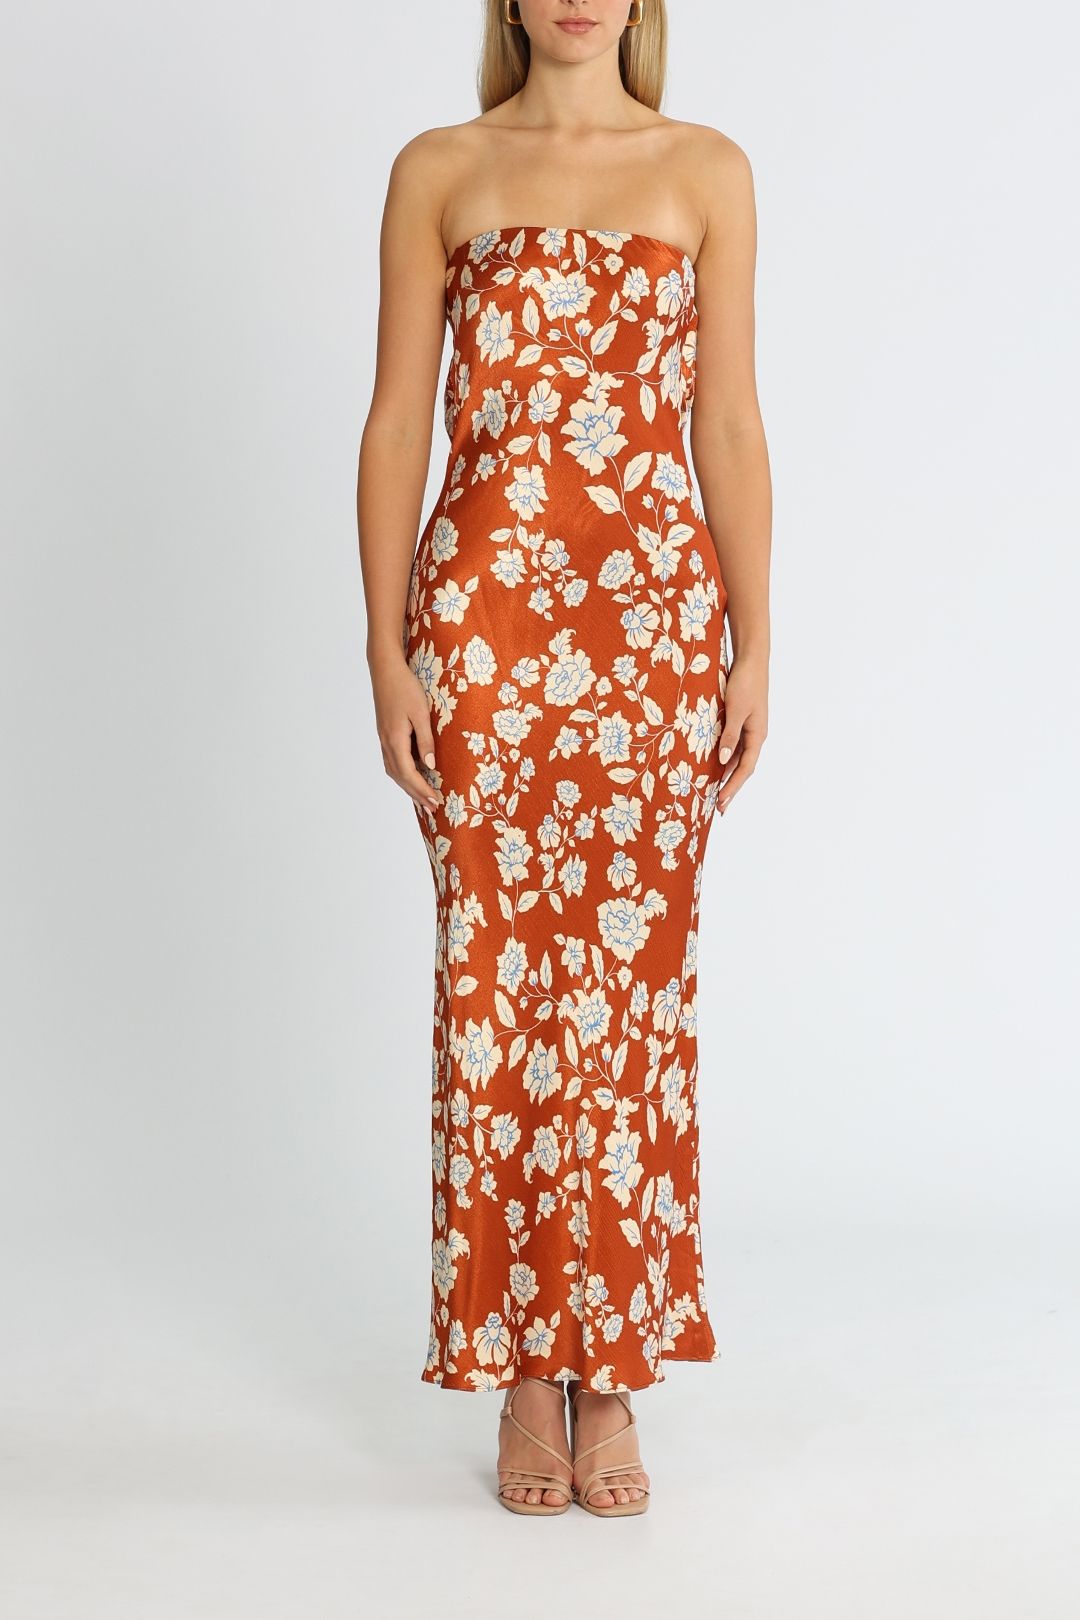 Bec and Bridge Blossom Strapless Maxi Dress Rust Print